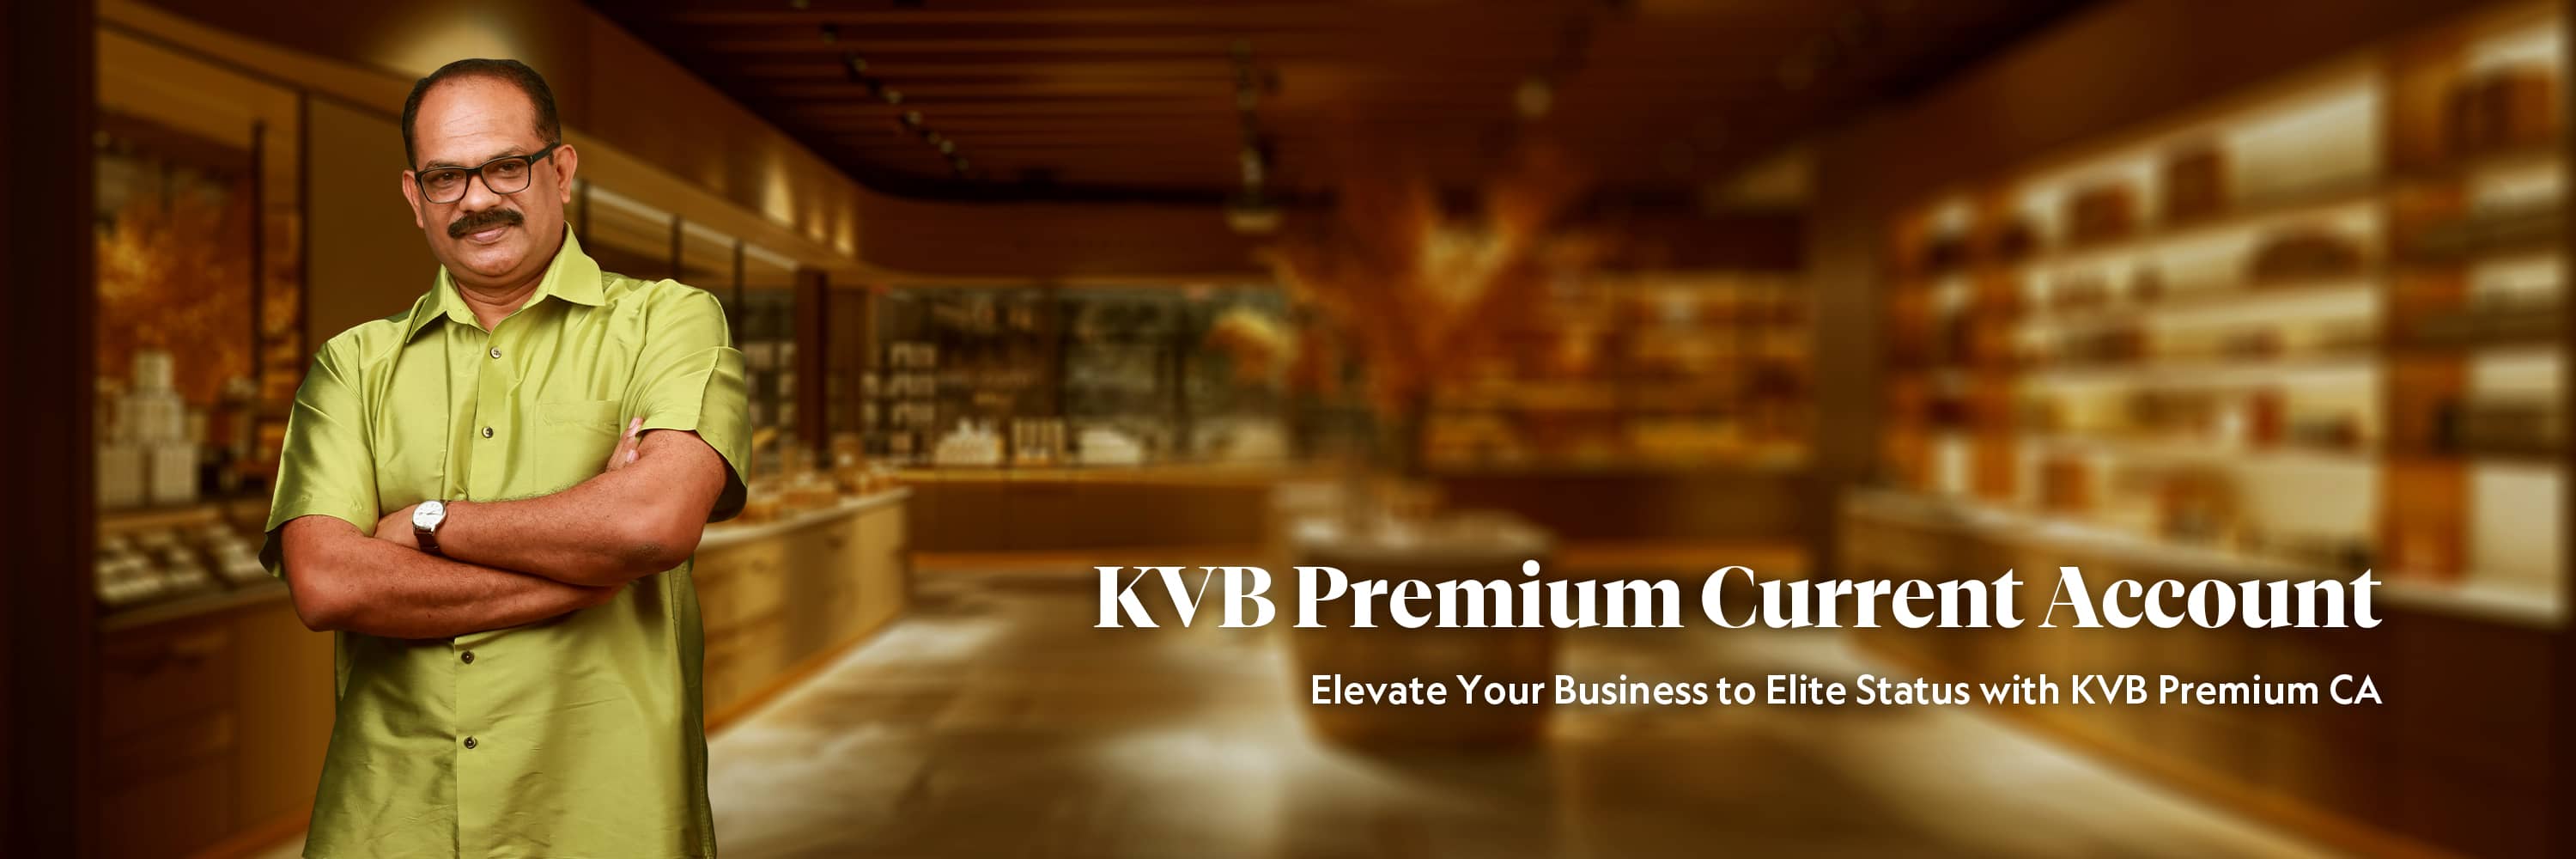 KVB Premium Current Account